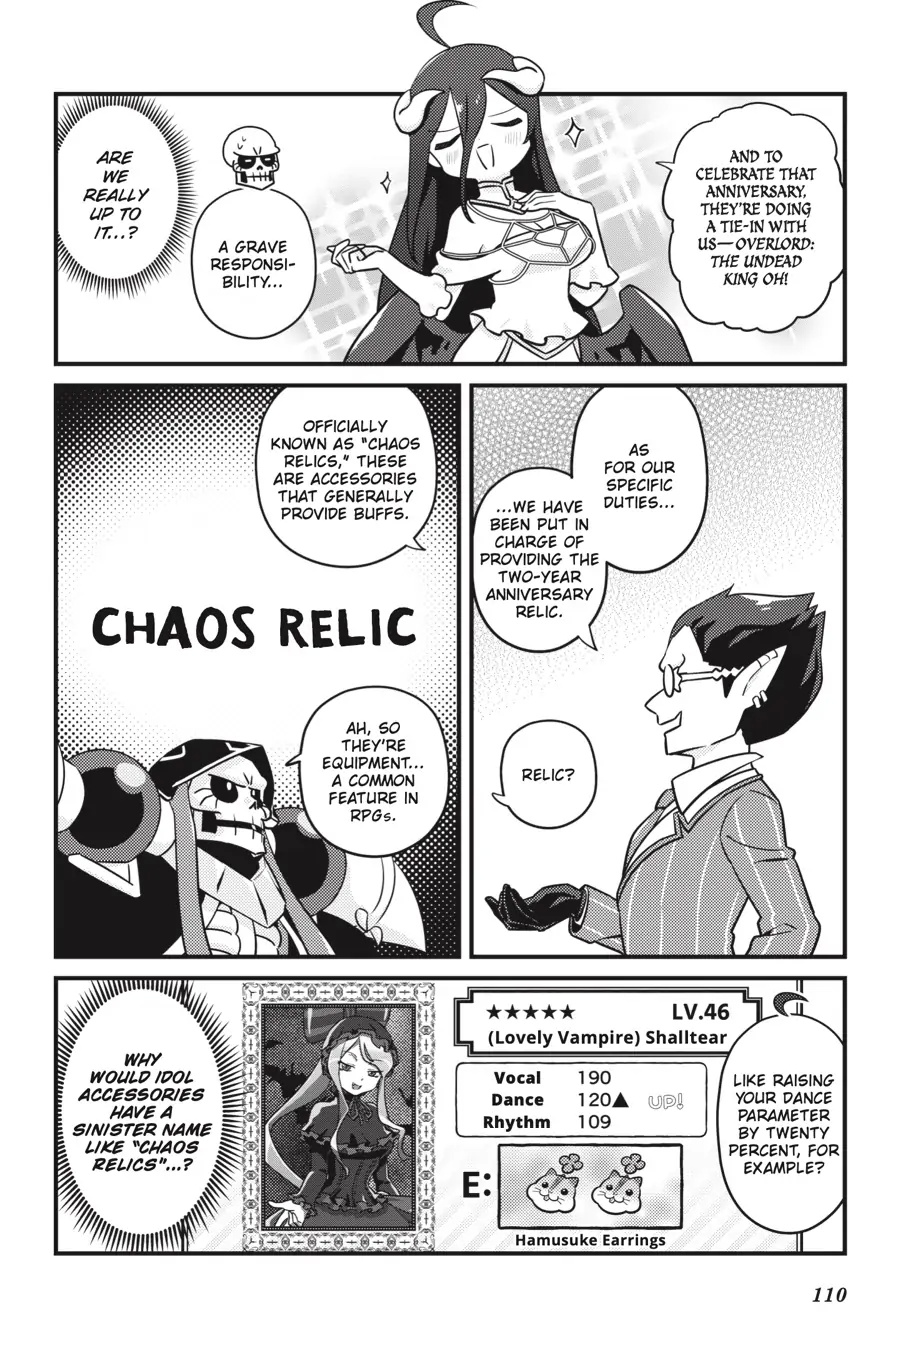 overlord manga chapter 28